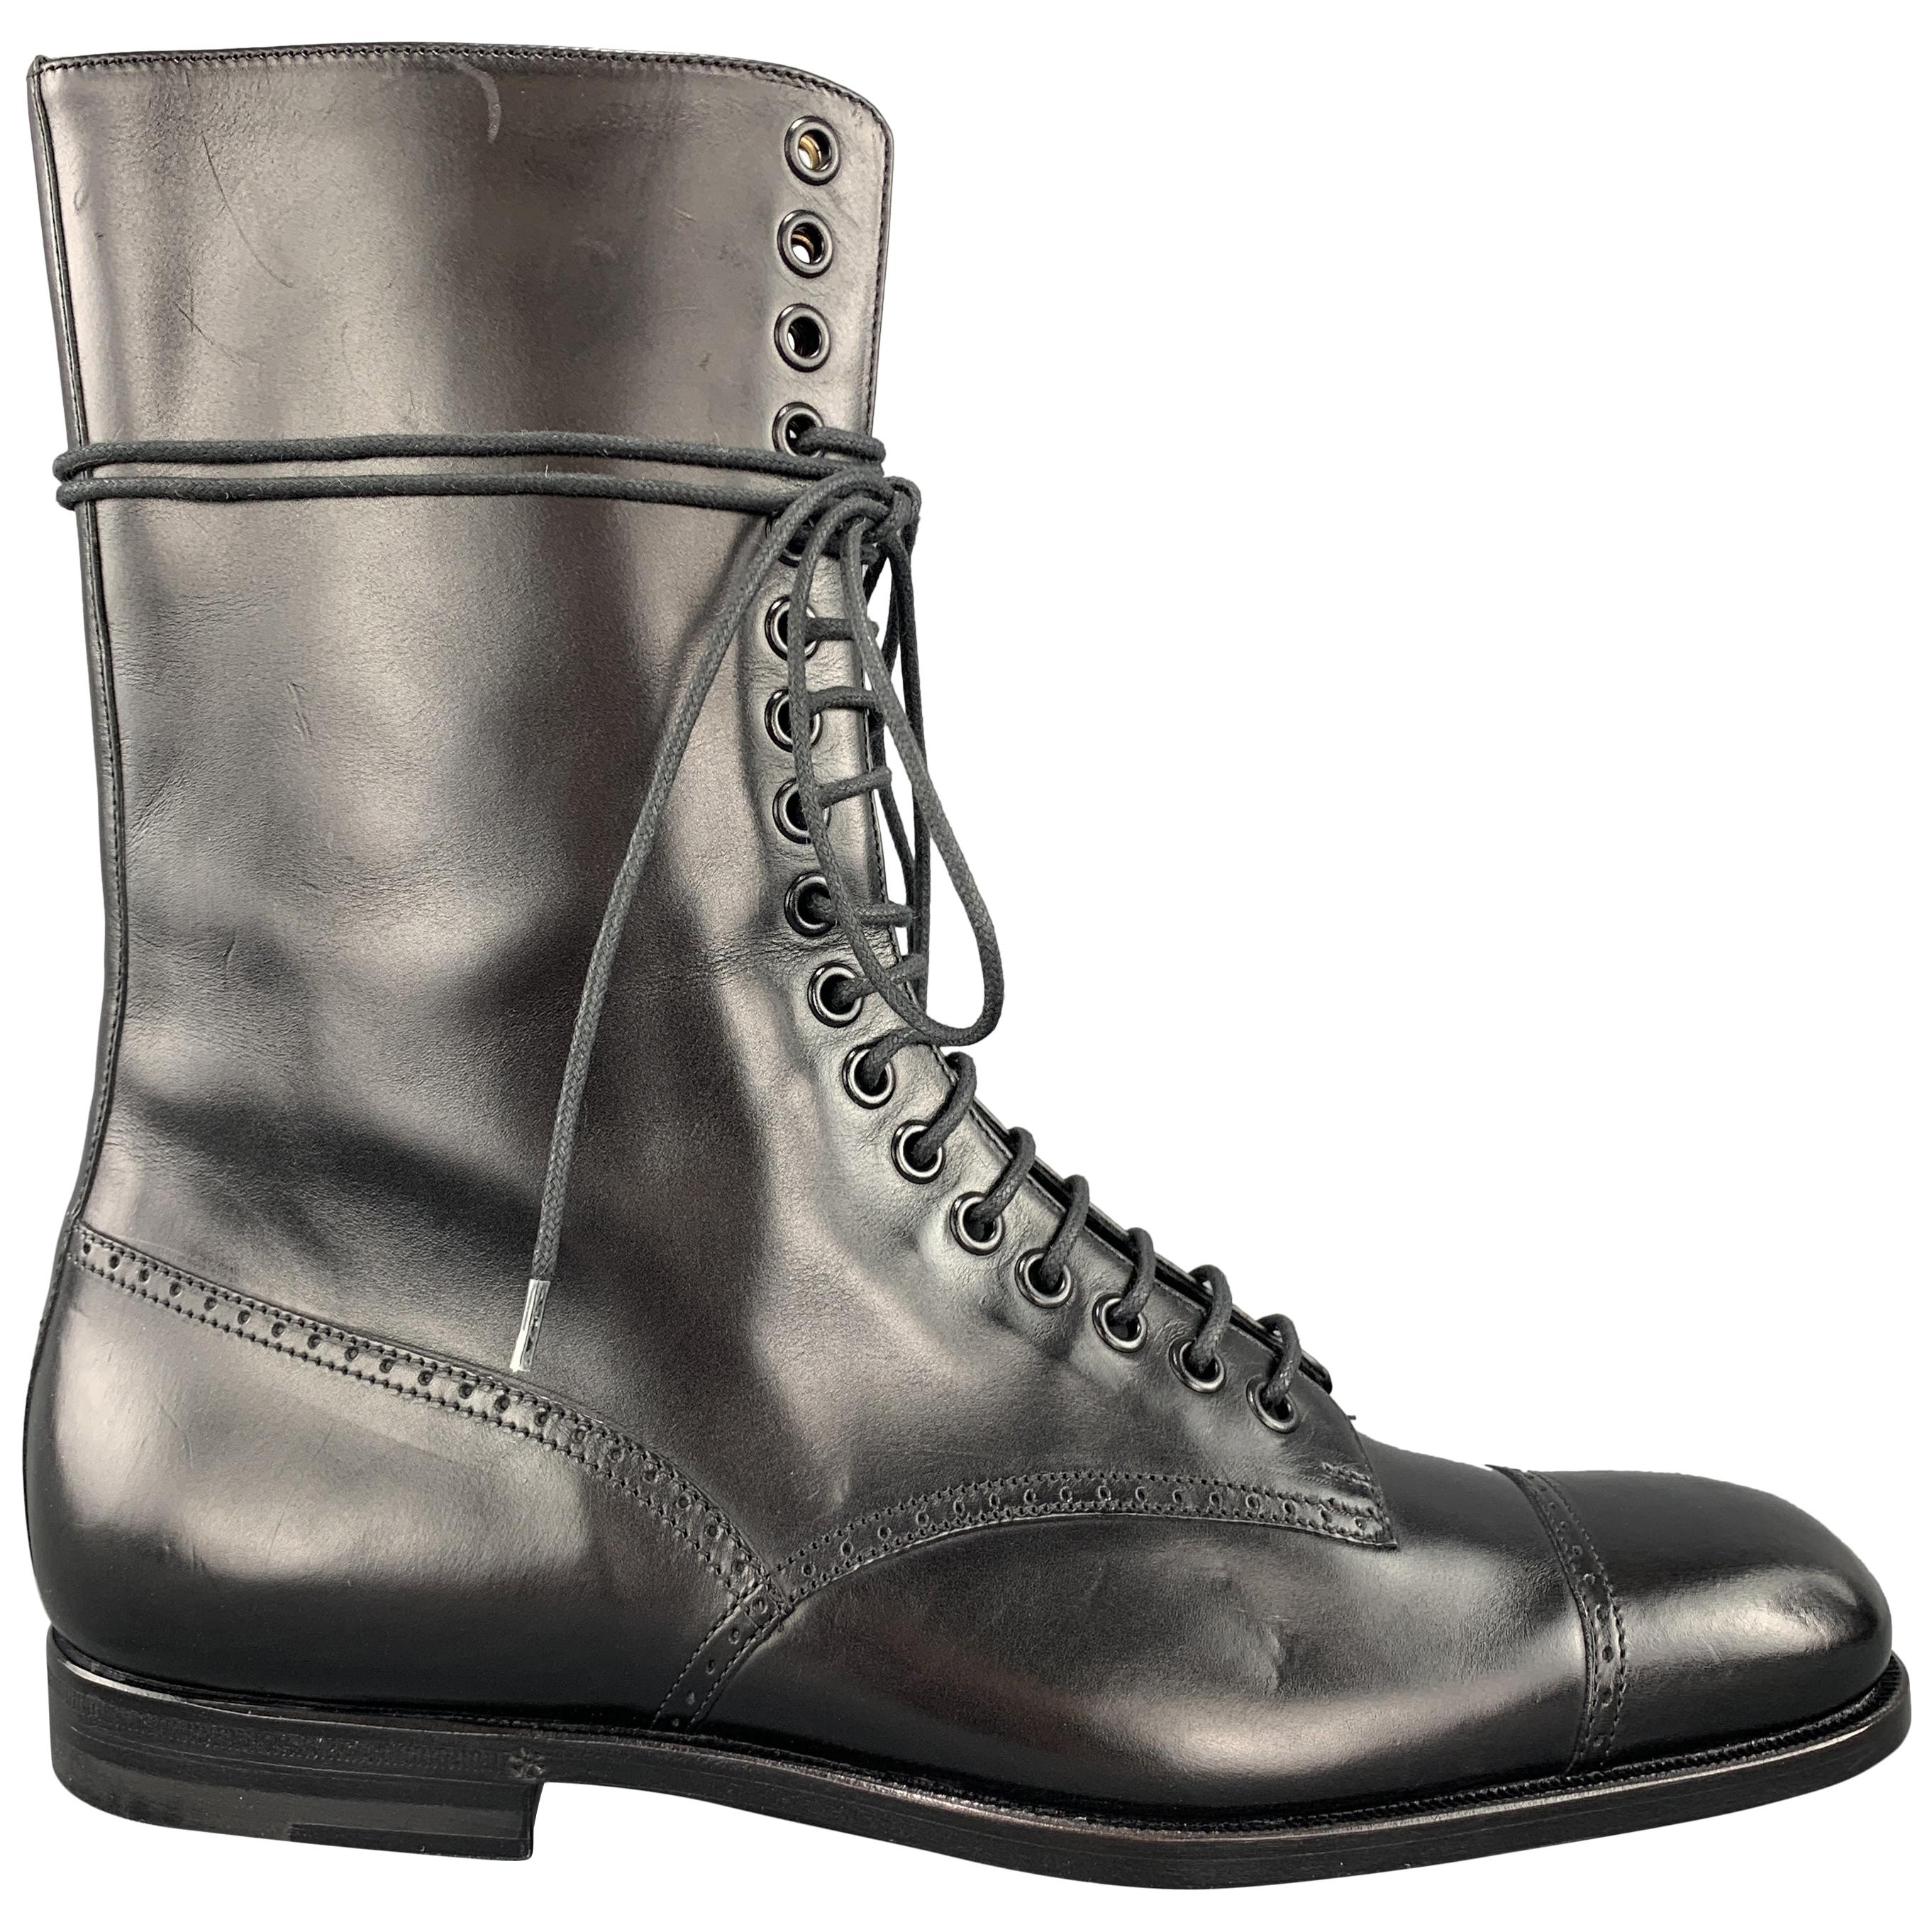 GUCCI Size 8.5 Black Leather Brogue Toe Cap Lace Up Calf Boots